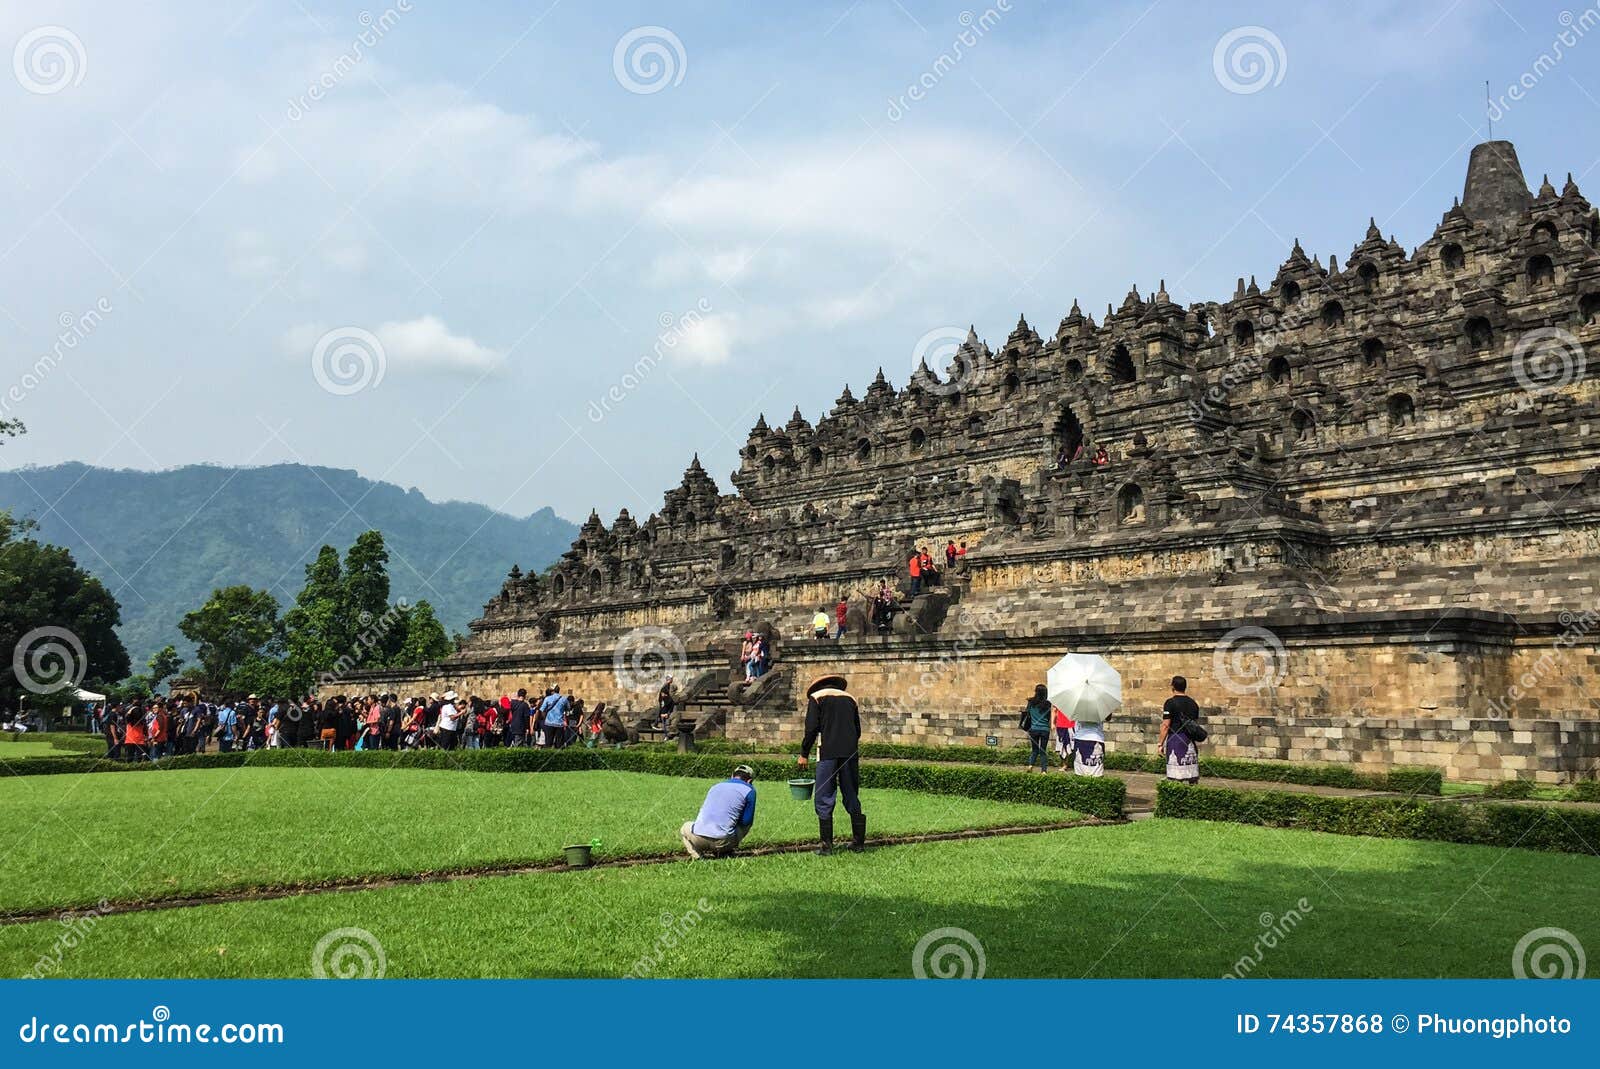 People Visit the Borobudur Temple in Jogja, Indonesia Editorial Stock